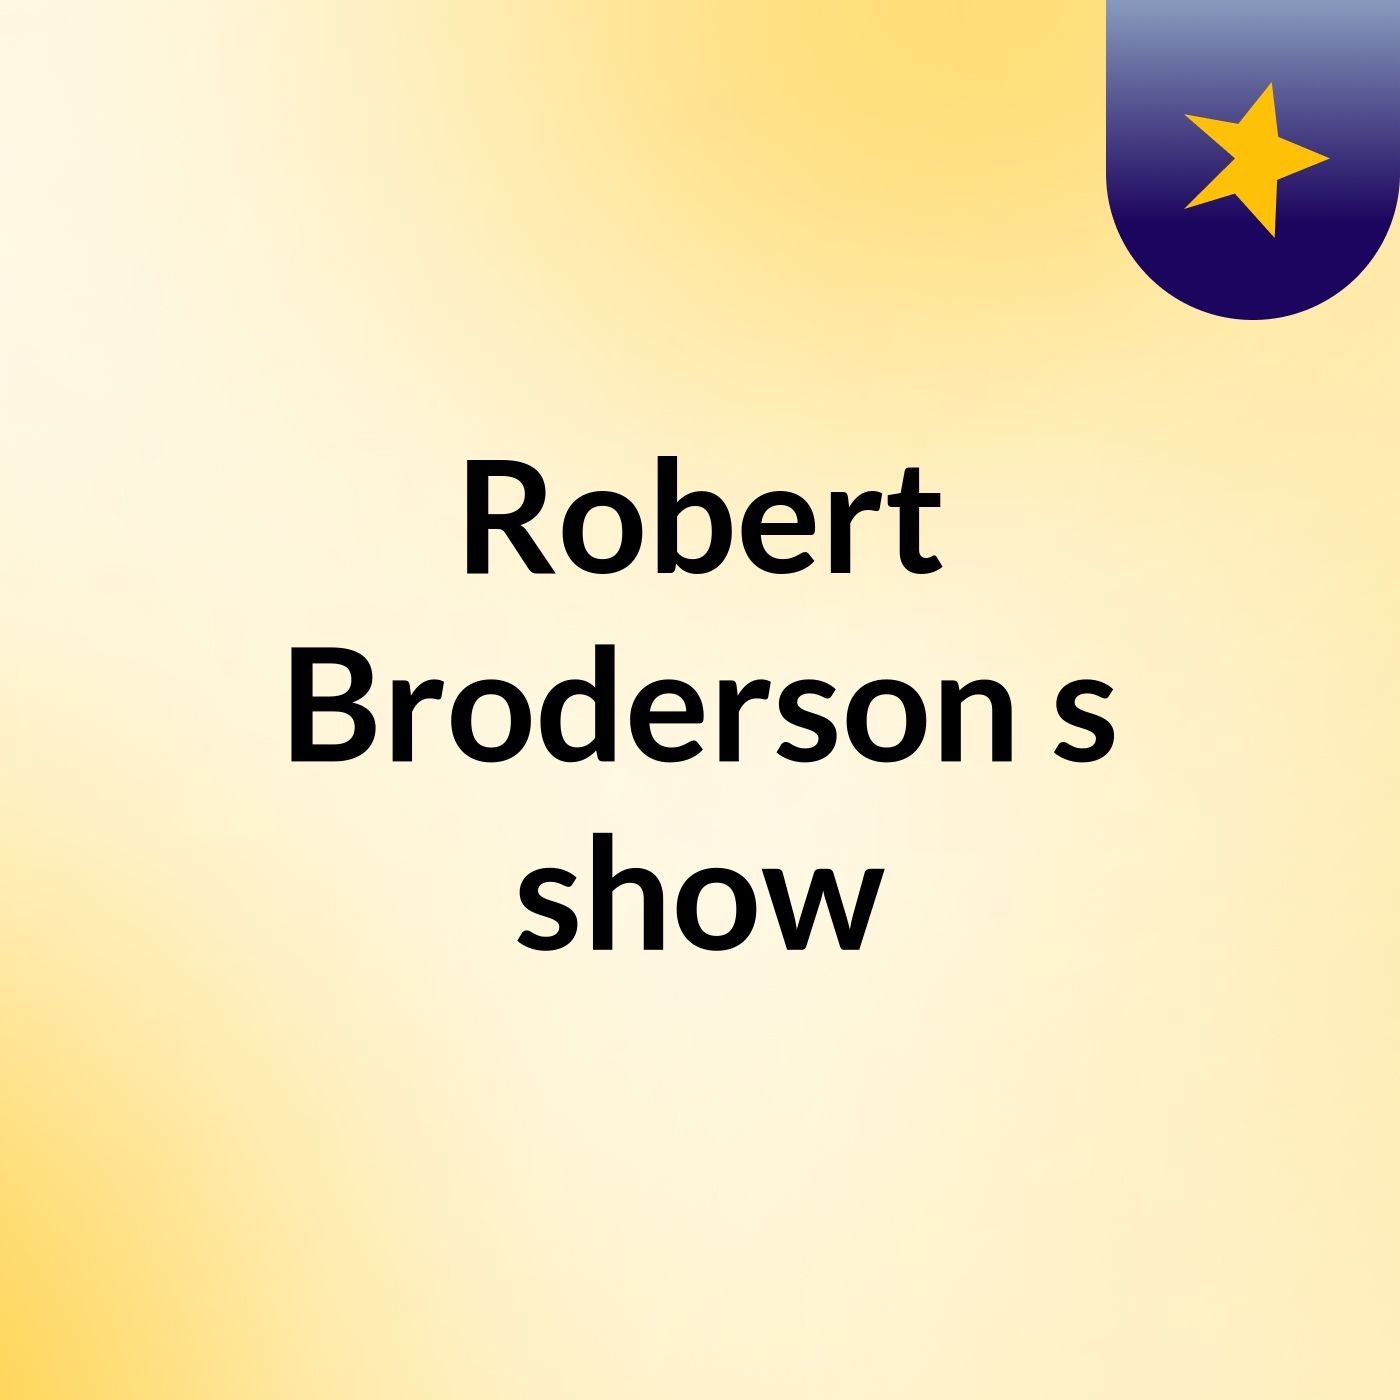 Robert Broderson's show